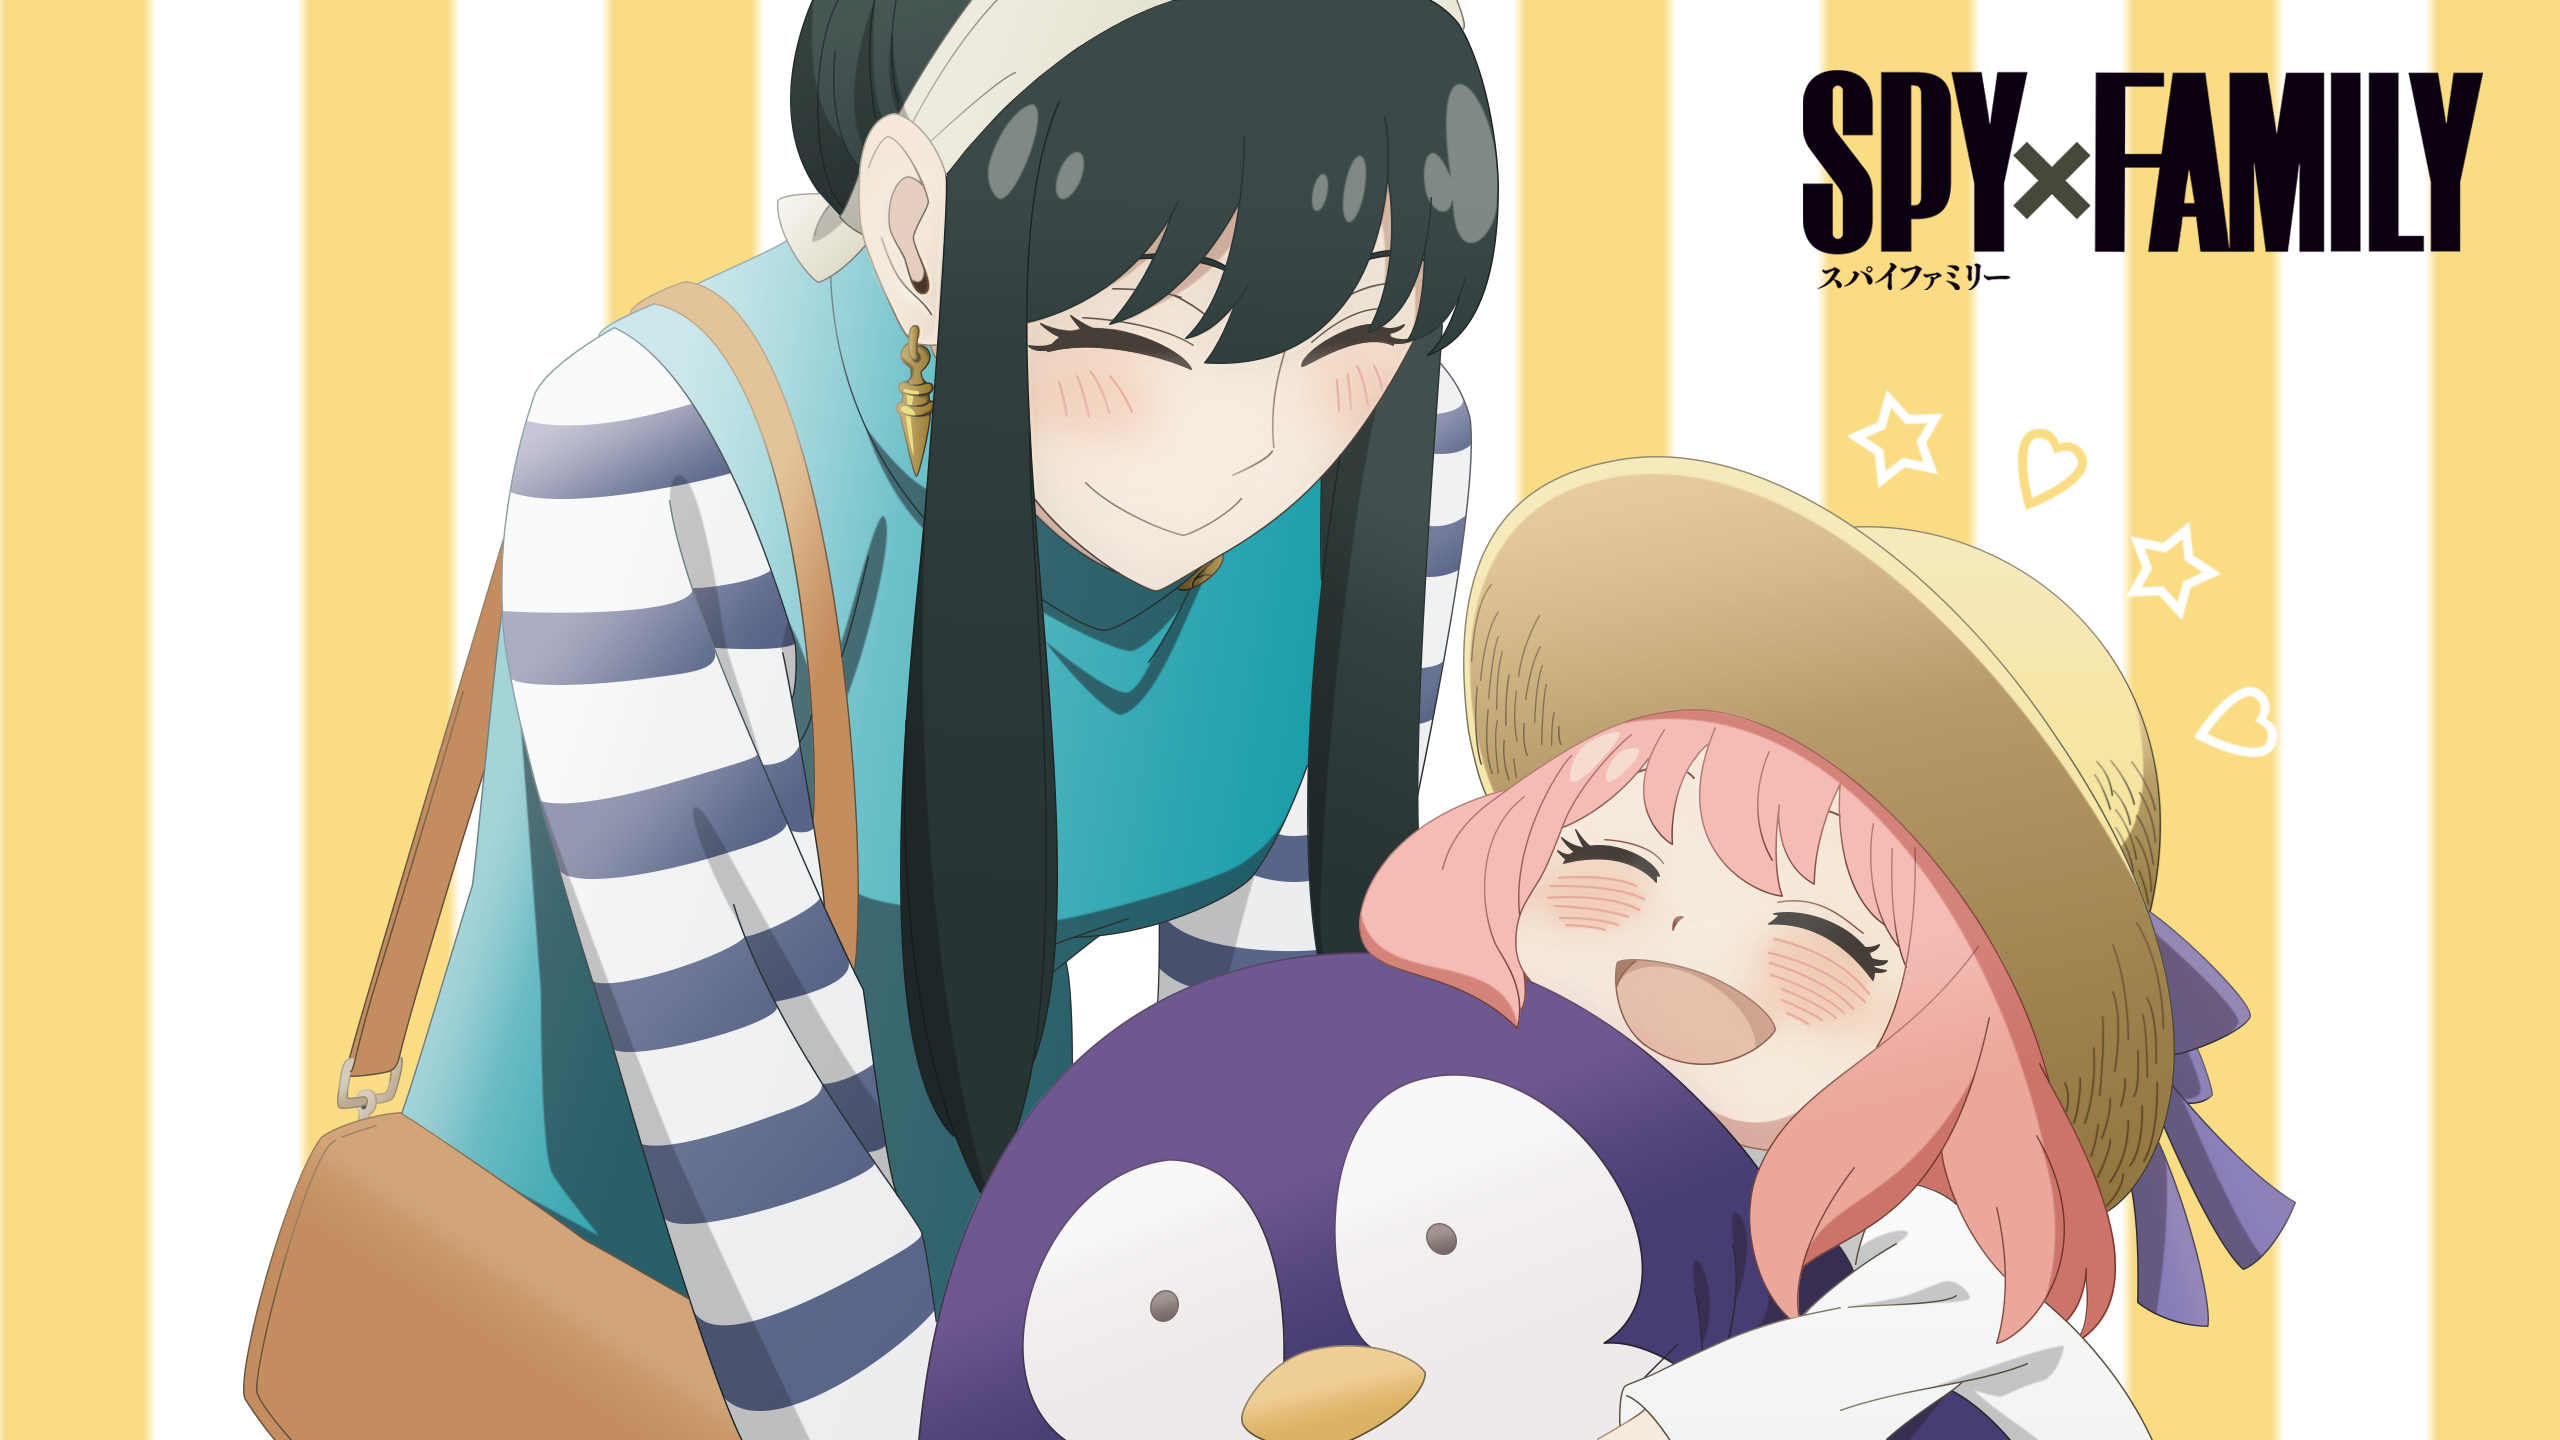 Anime 2560x1440 Spy x Family Yor Forger Anya Forger smiling blushing closed eyes plush toy anime girls